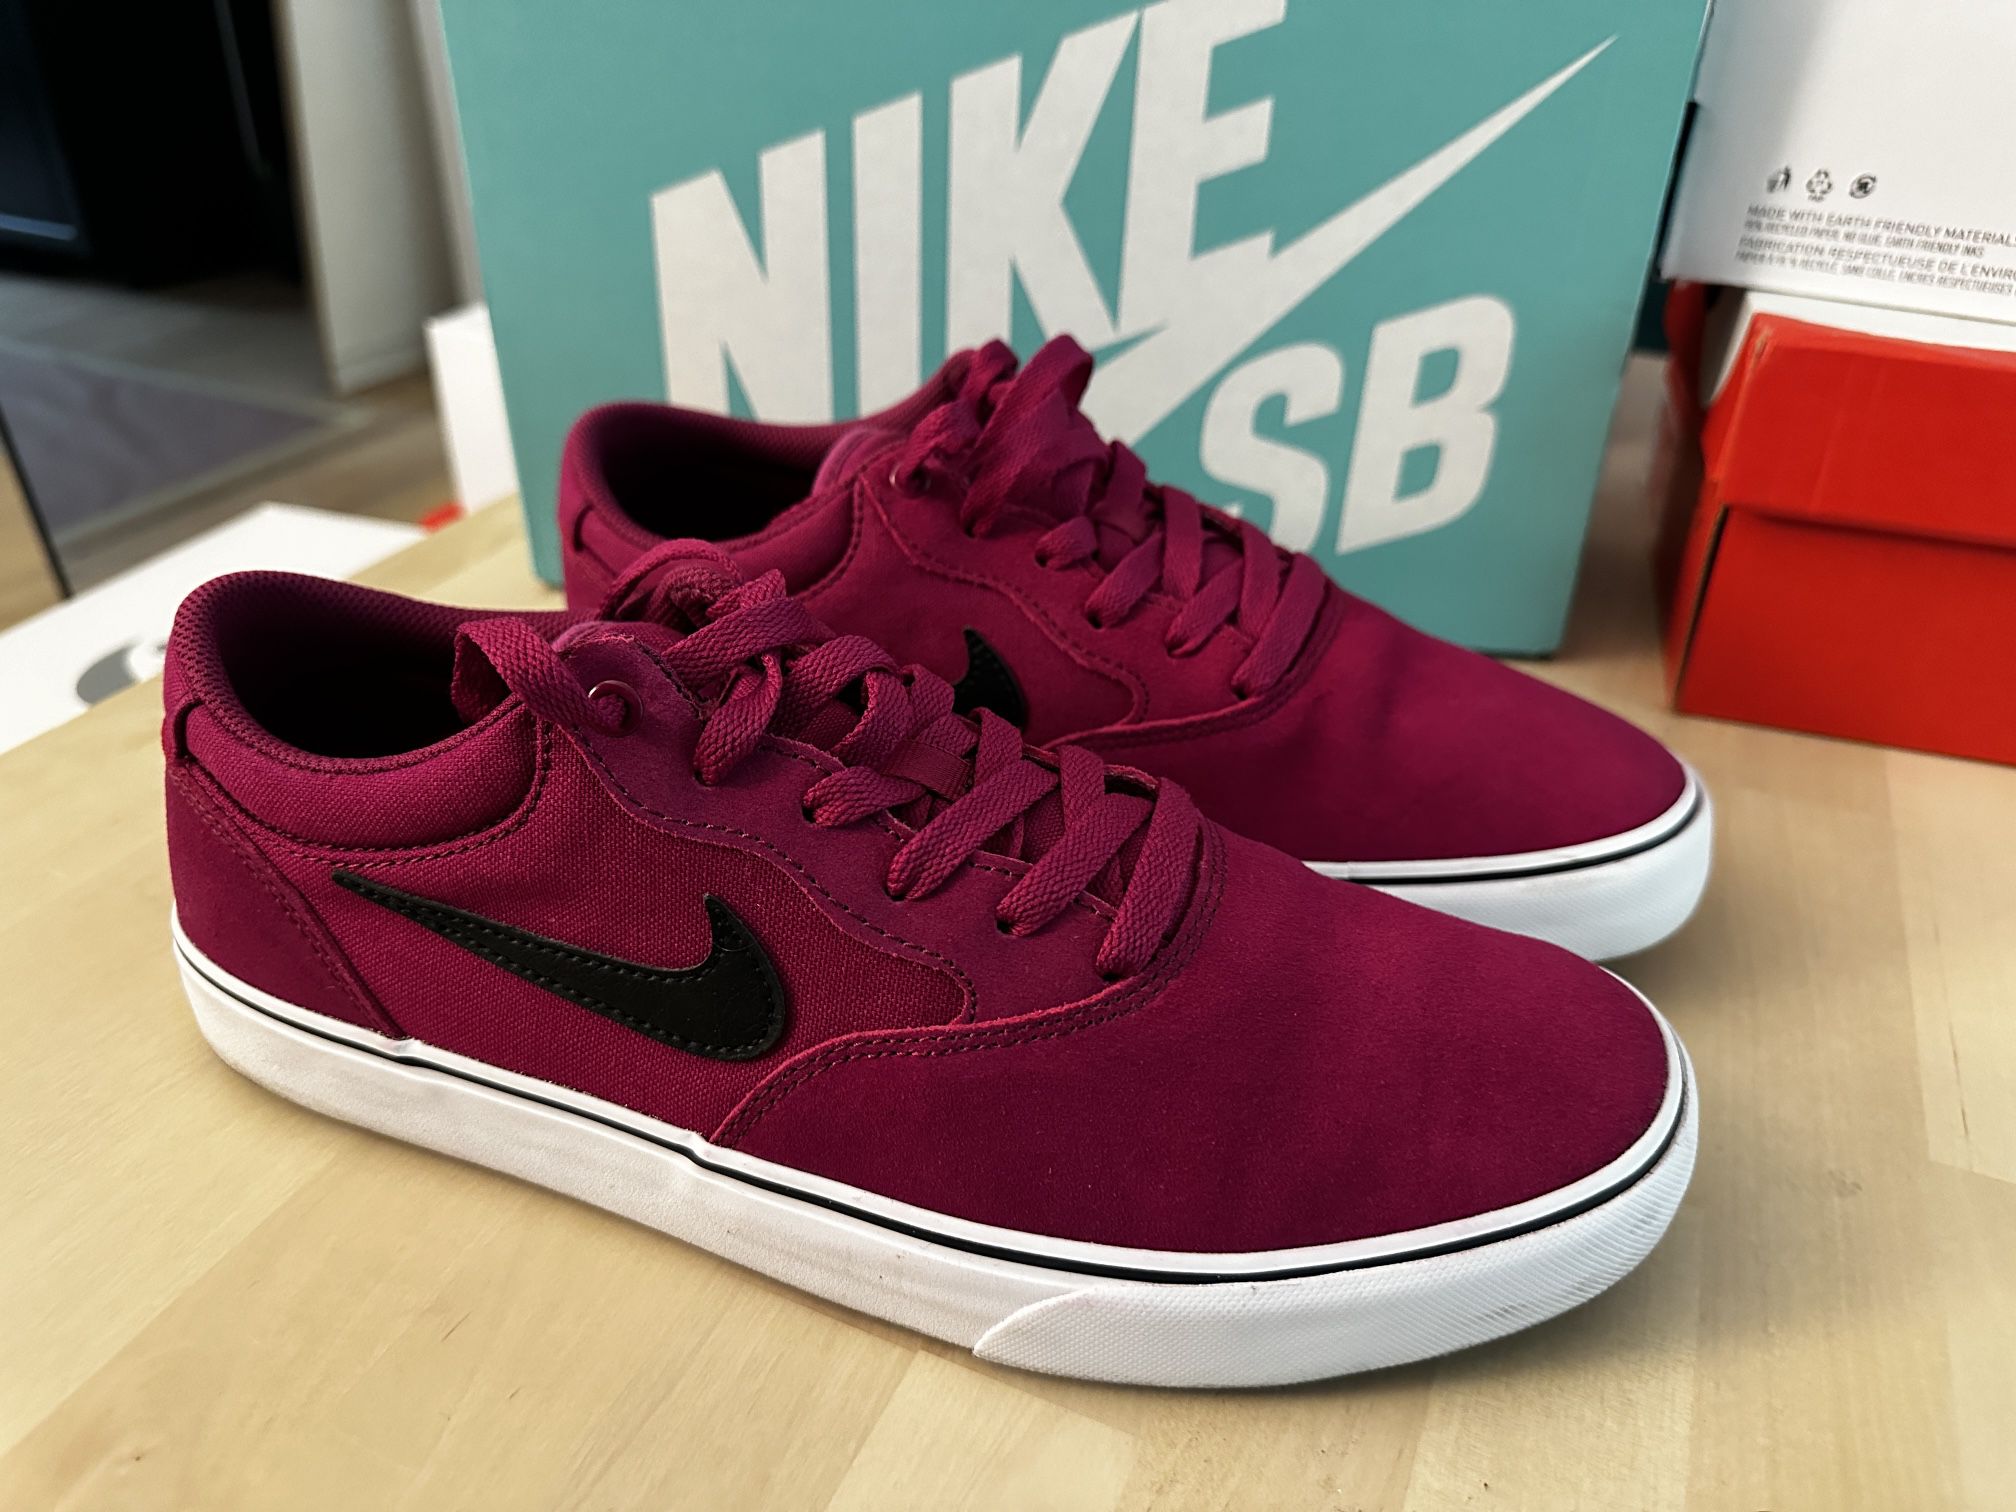 Nike SB Chron 2 Purple Size 10.5